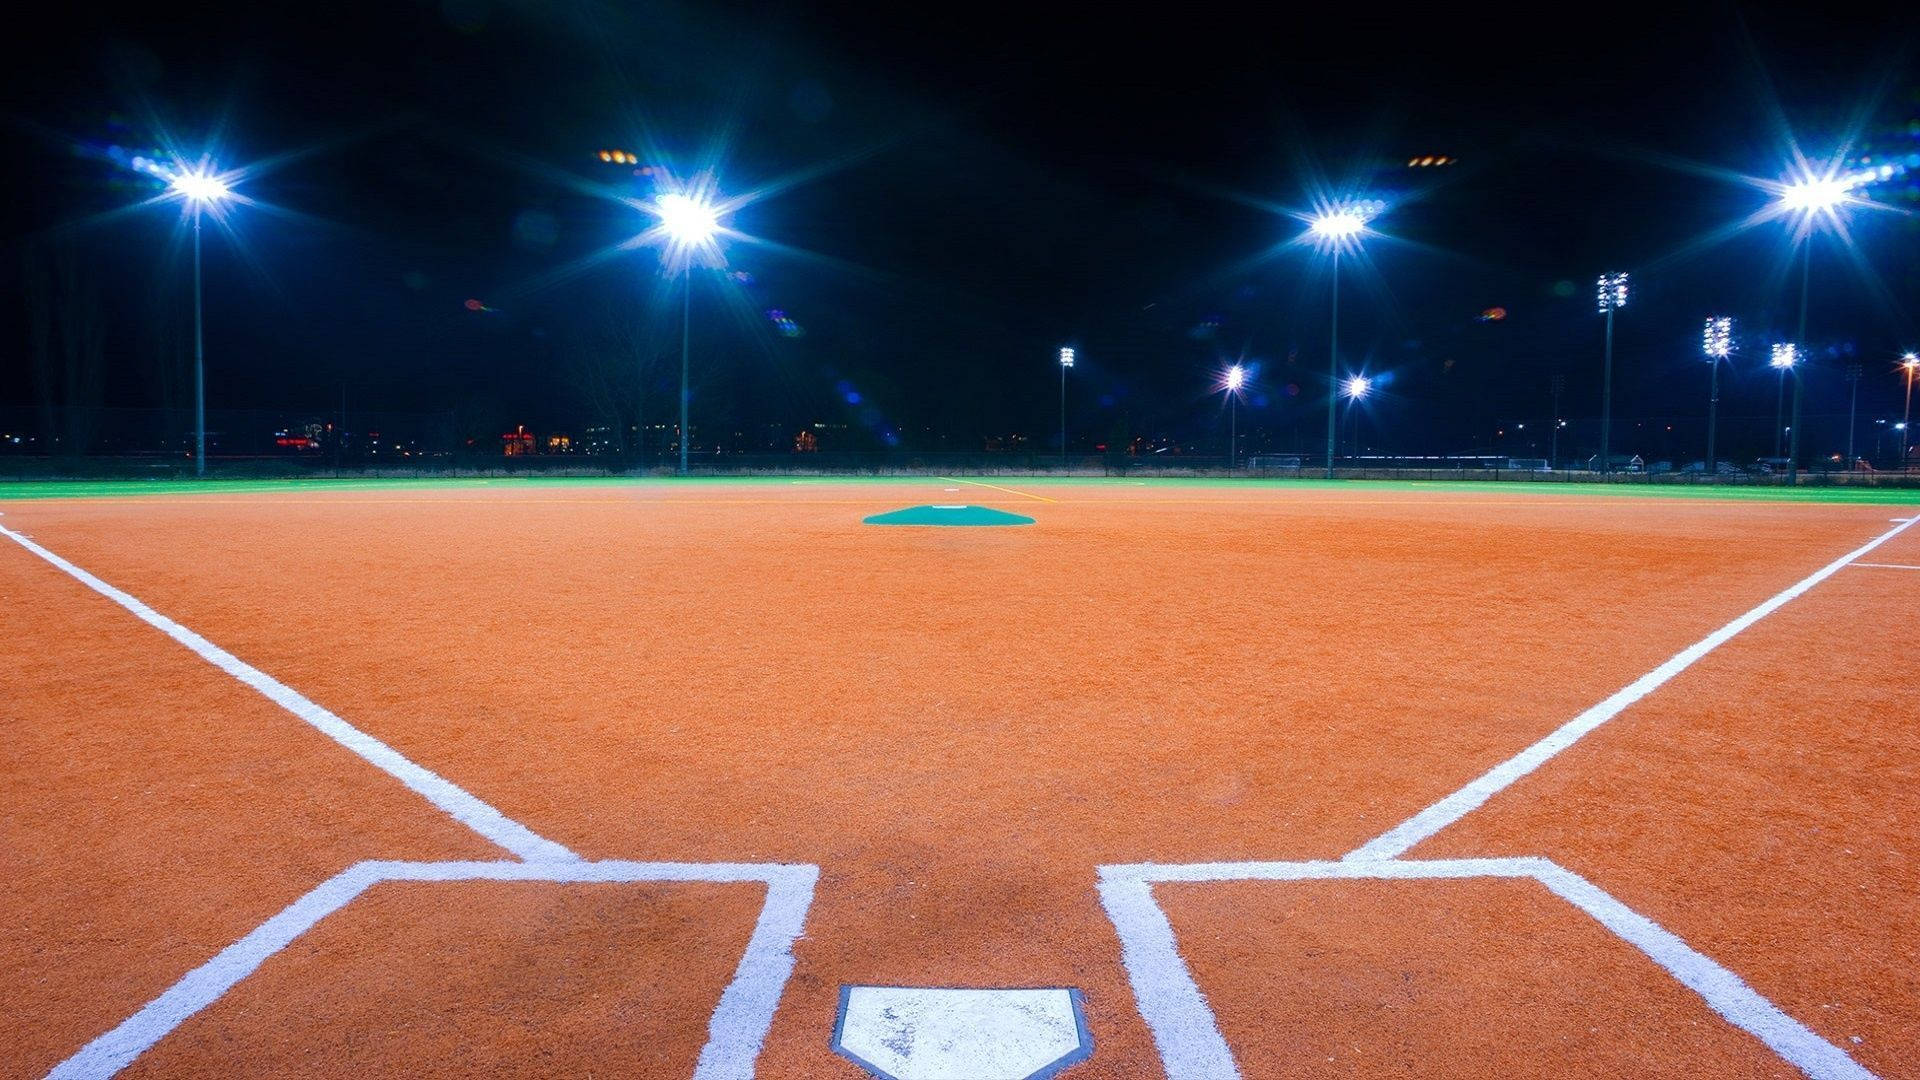 “Enjoy the Empty View of a Baseball Stadium” Wallpaper